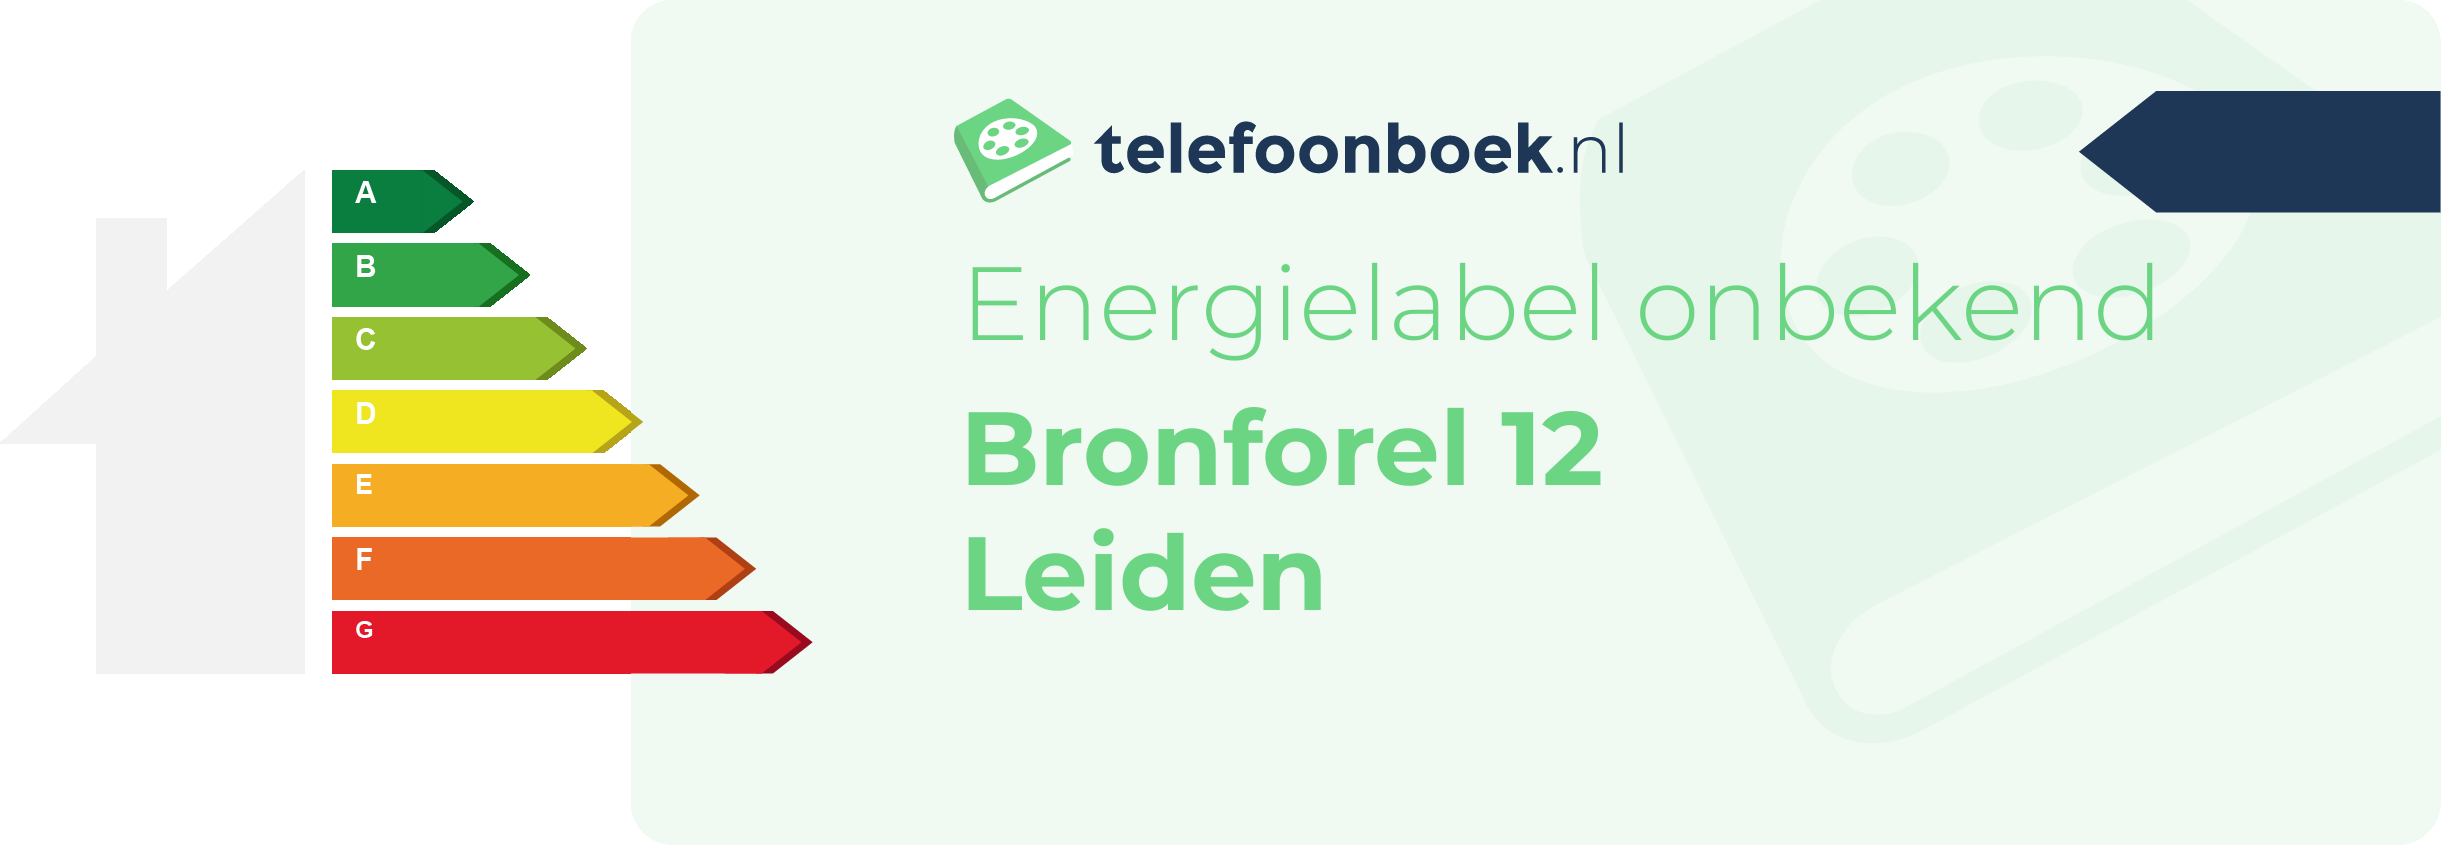 Energielabel Bronforel 12 Leiden